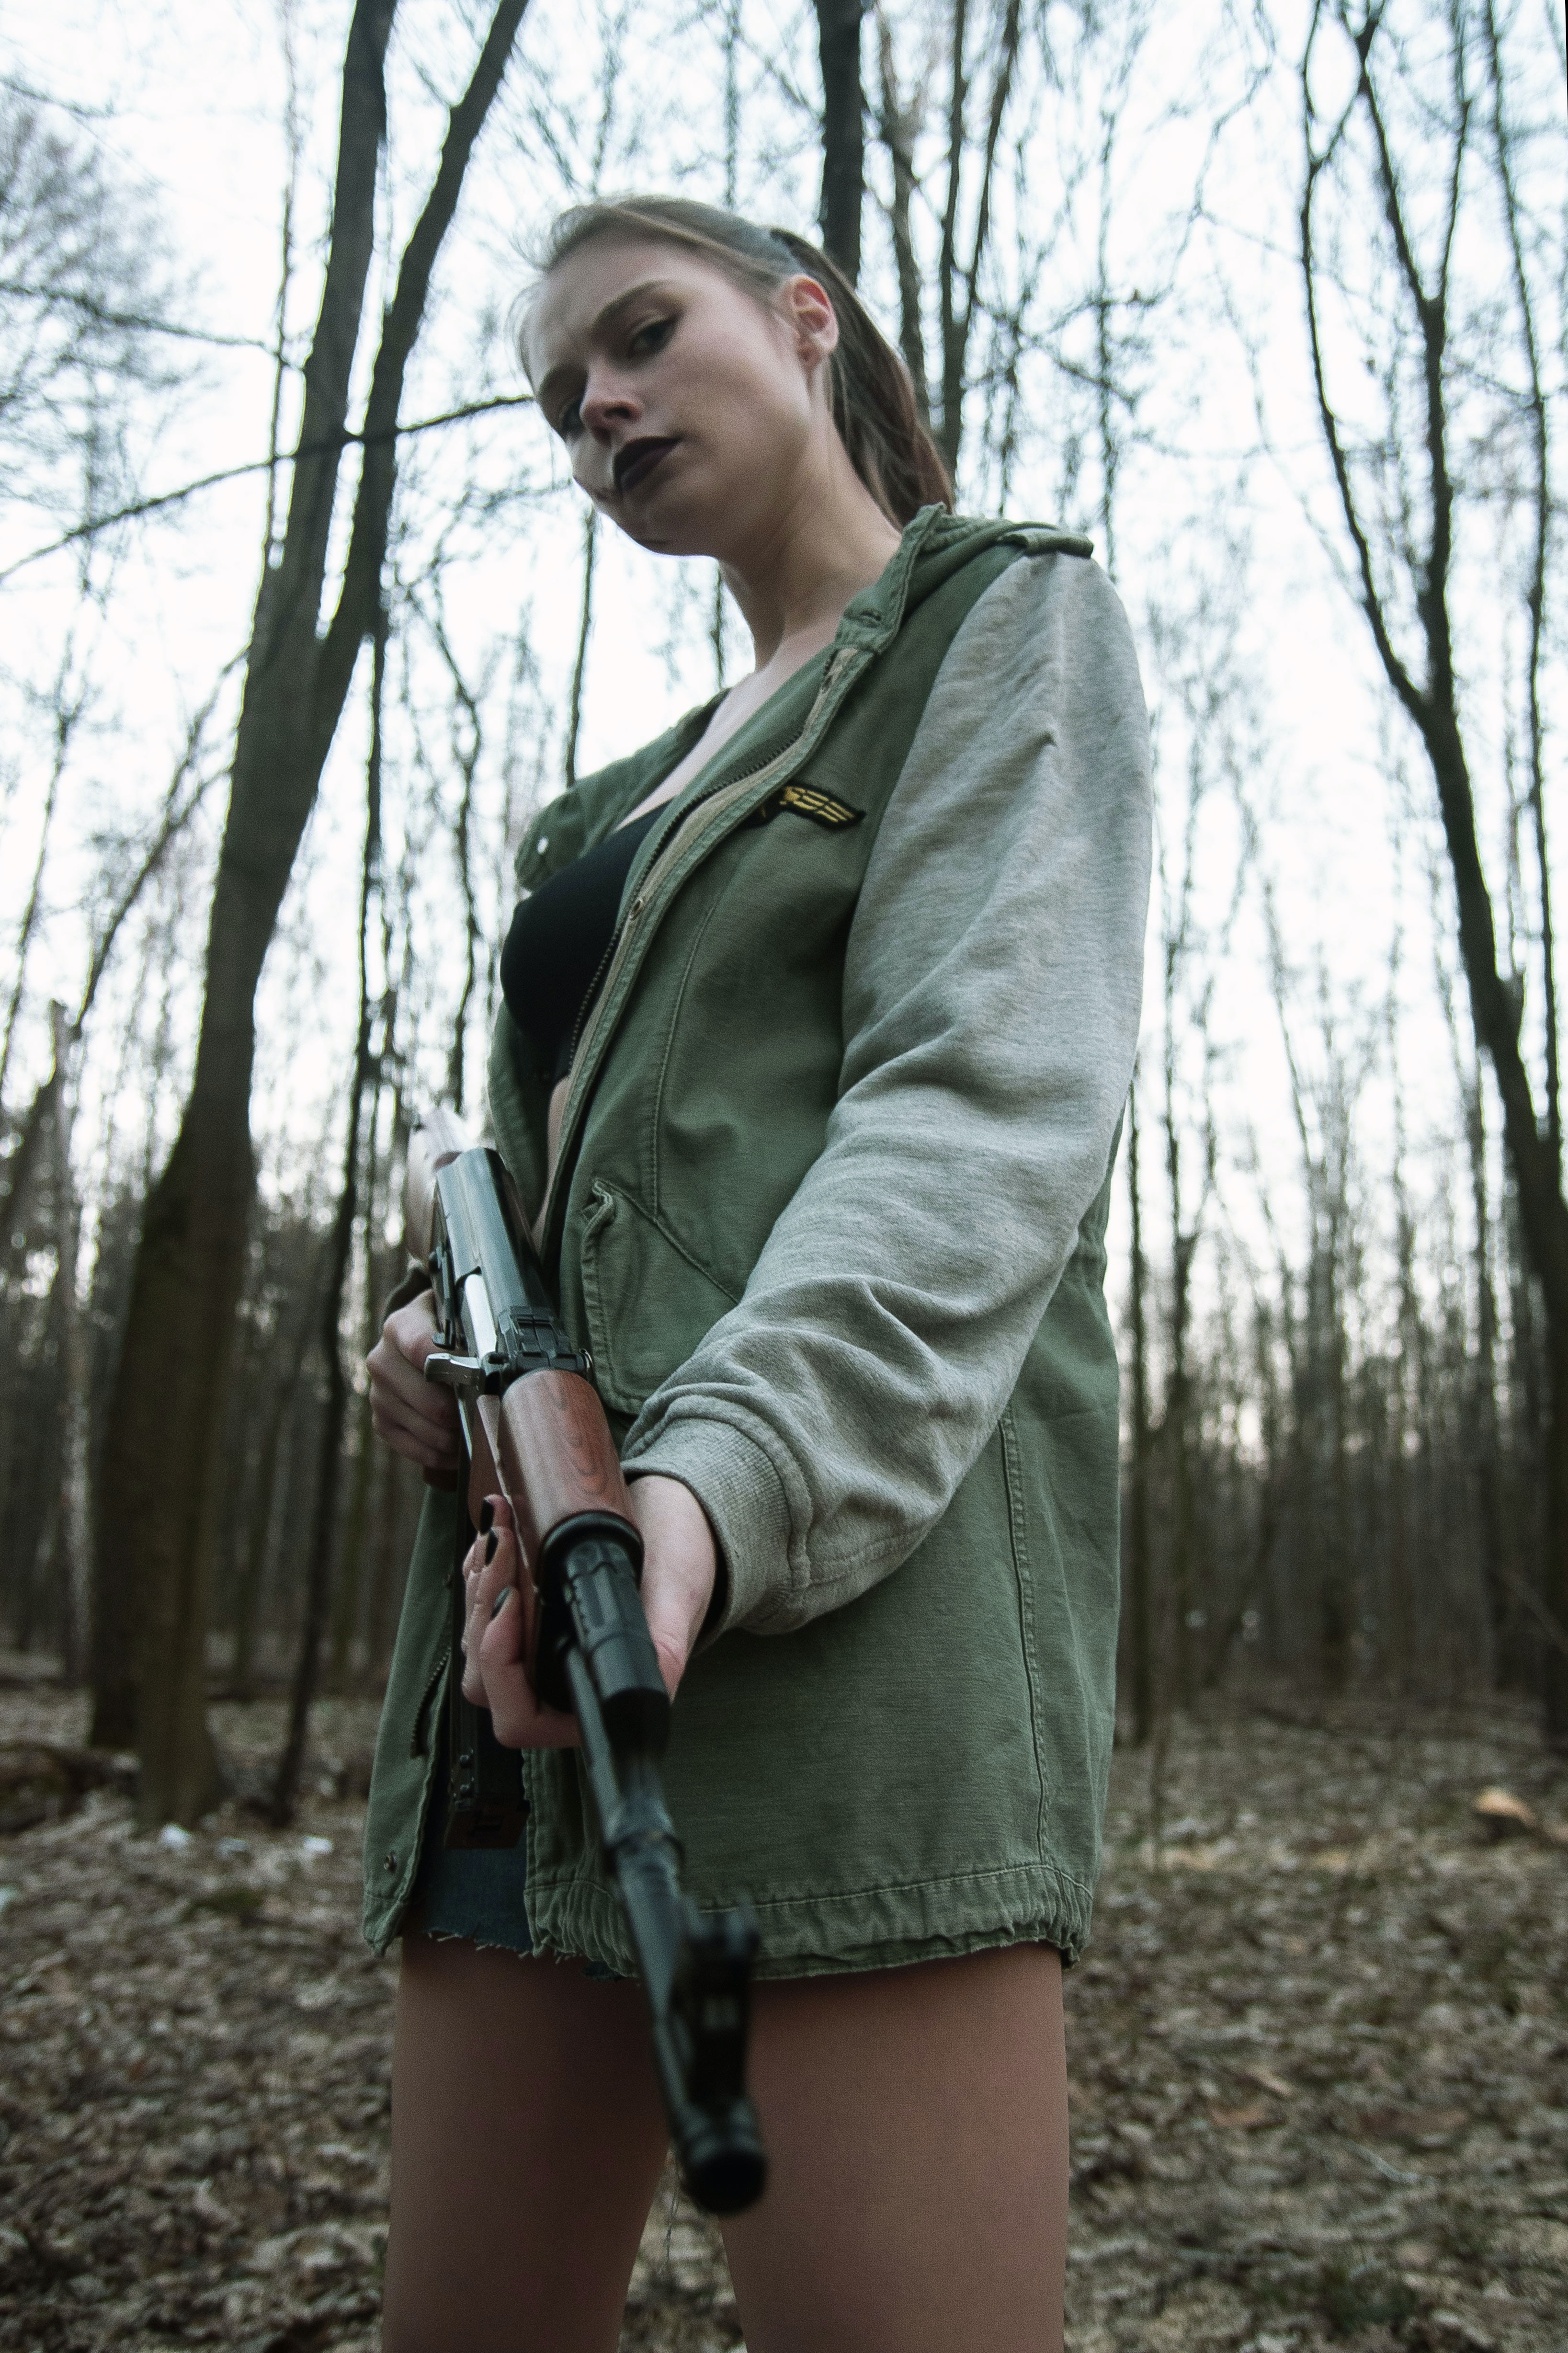 girl with AK rifle